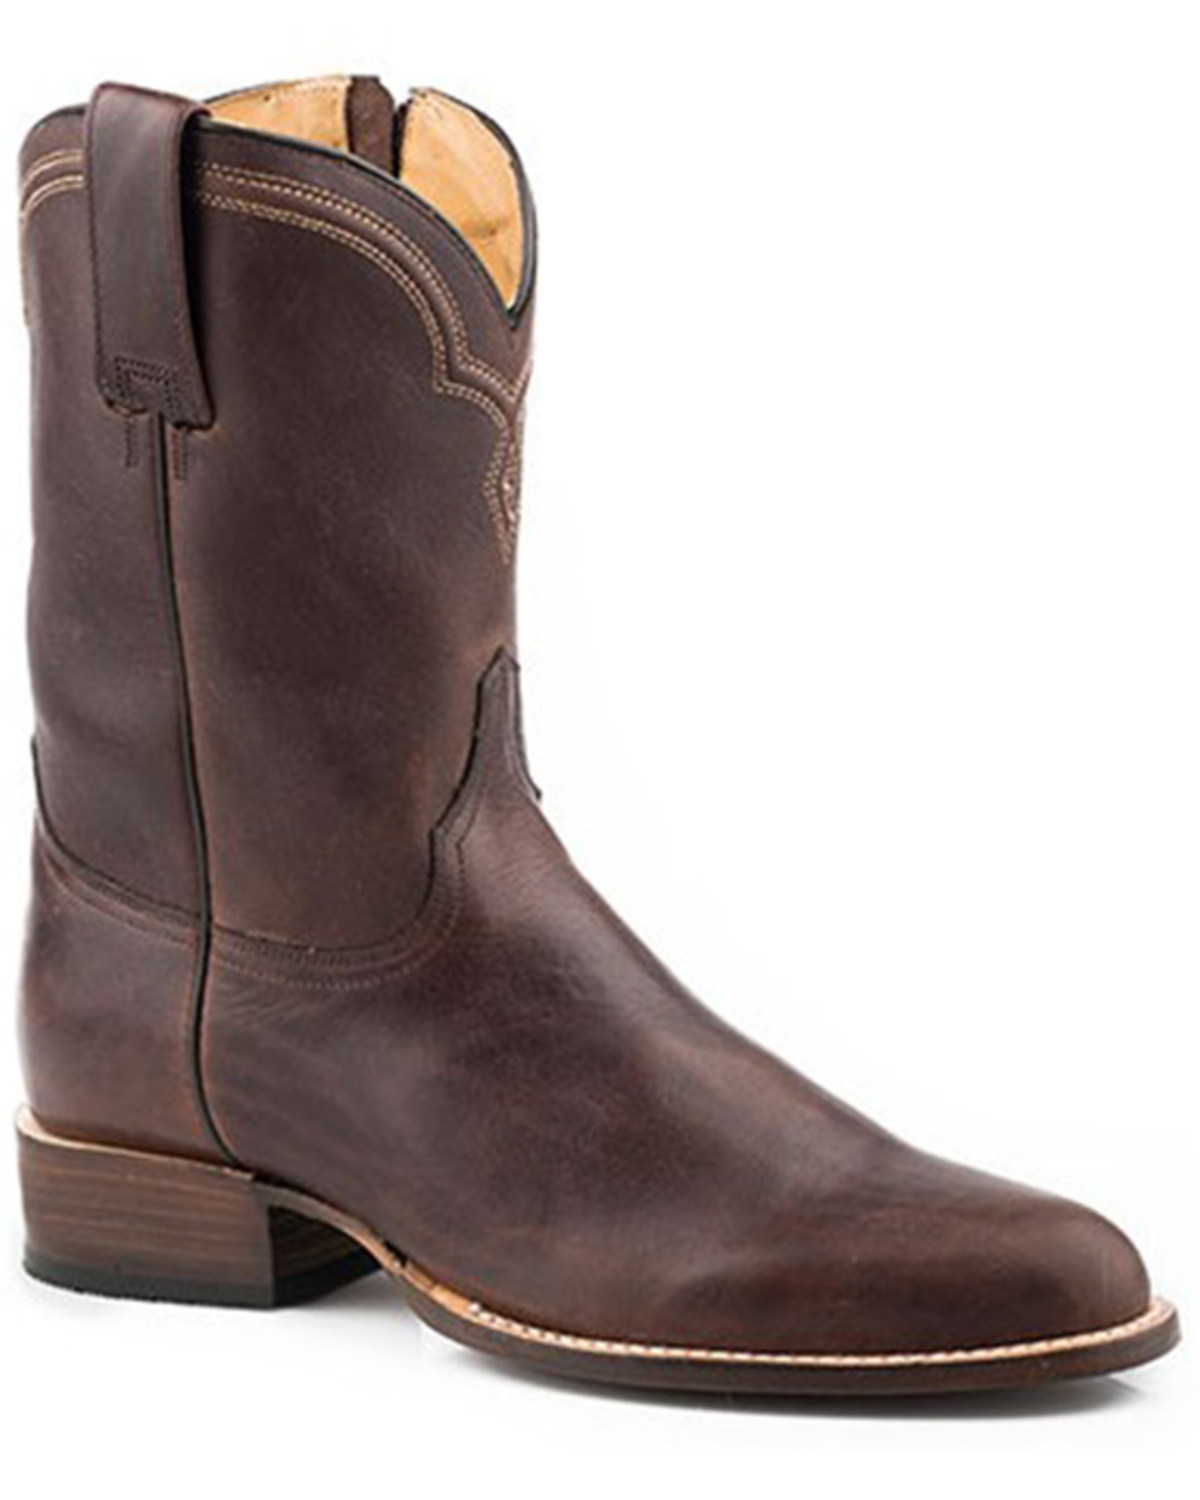 Stetson Men's Rancher Zip Oily Vamp Western Roper Boots - Round Toe